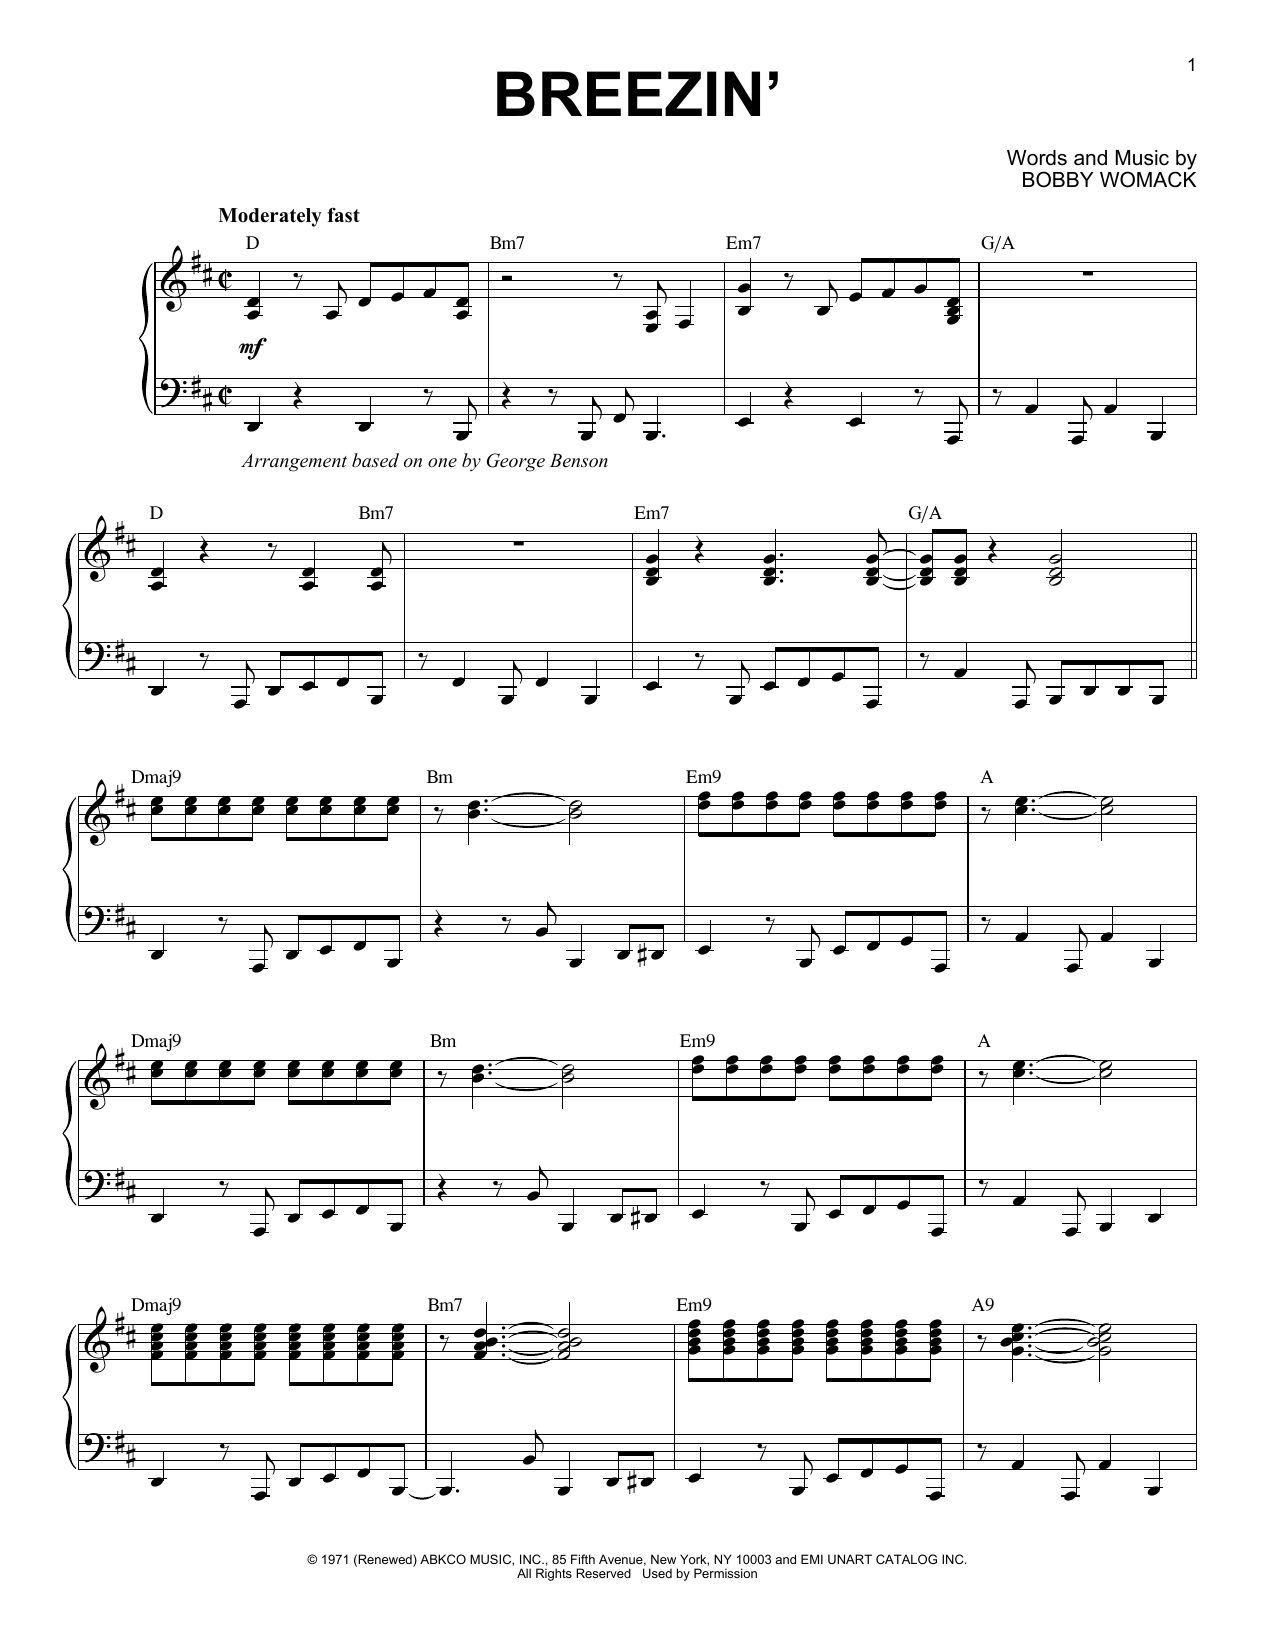 George Benson Breezin' Sheet Music Notes & Chords for Guitar Tab (Single Guitar) - Download or Print PDF